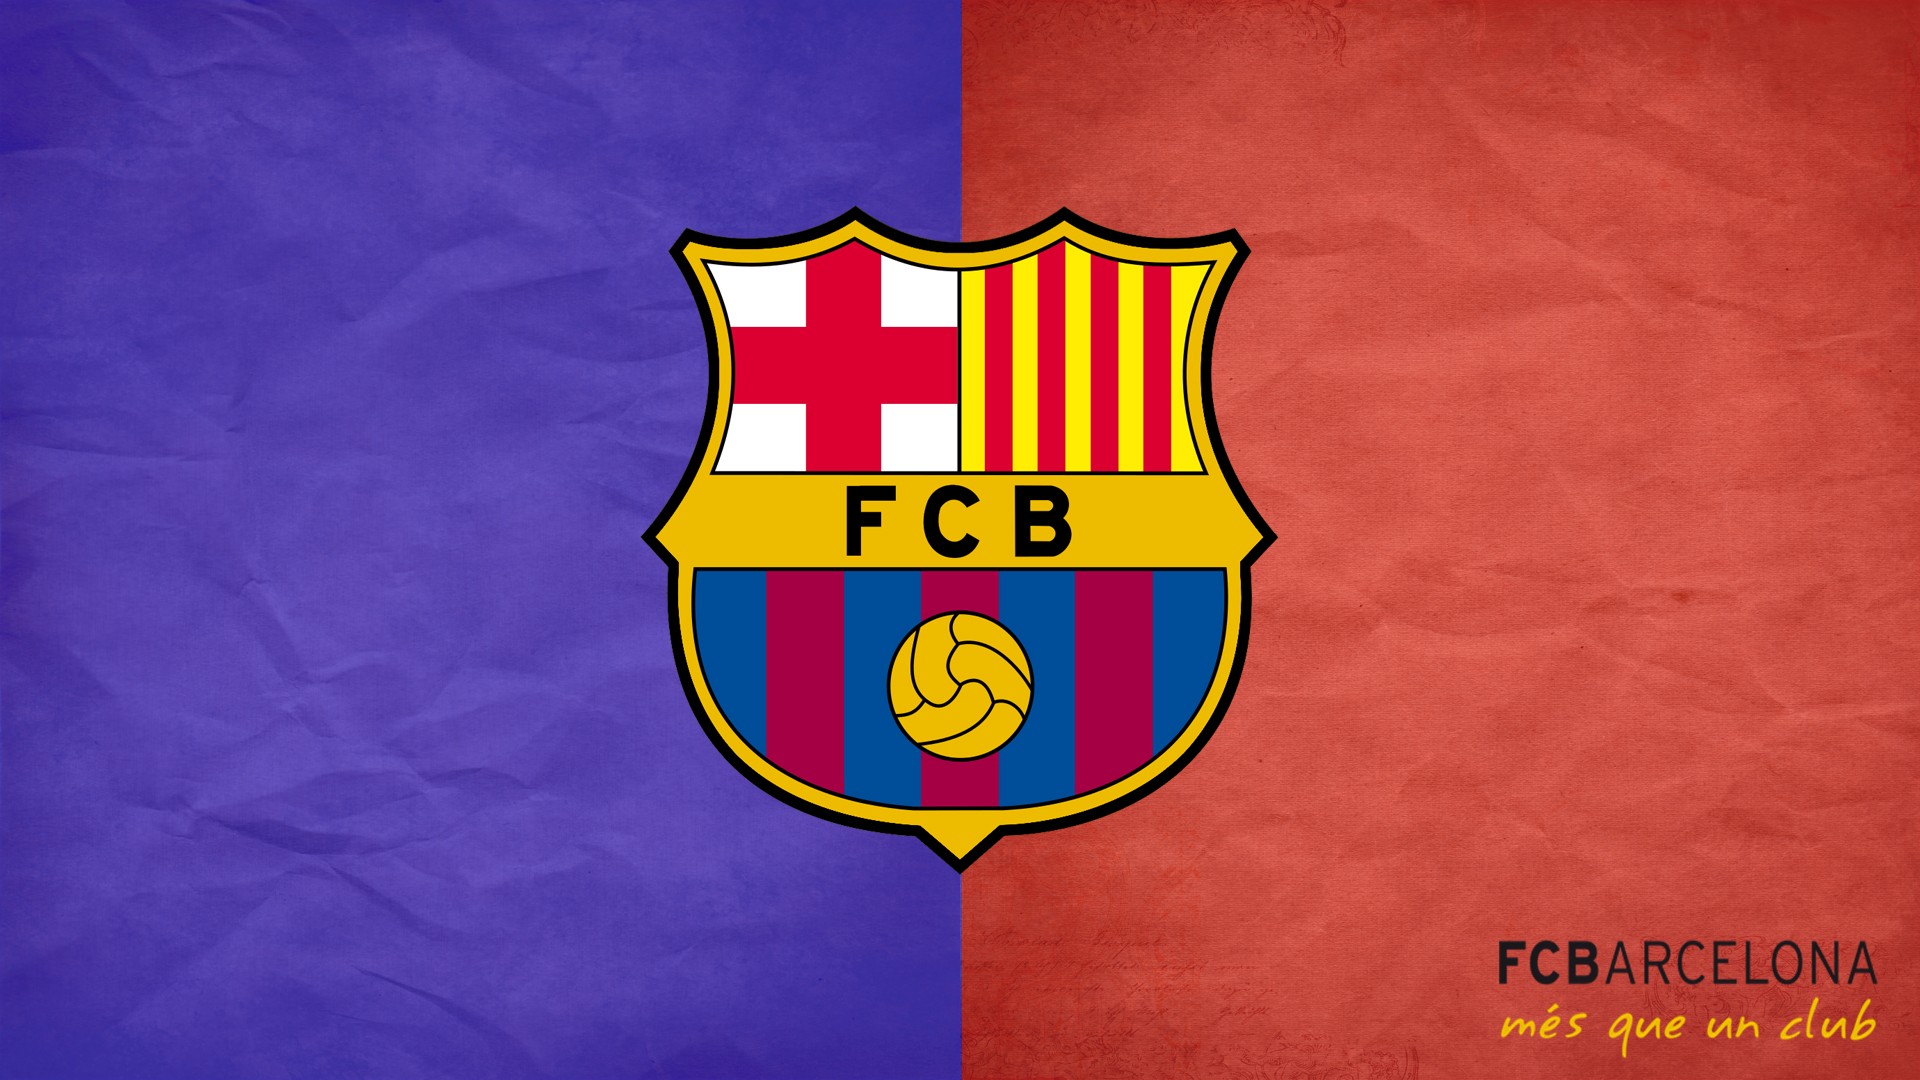 General 1920x1080 barca Barcelona FC Barcelona logo sport soccer clubs soccer